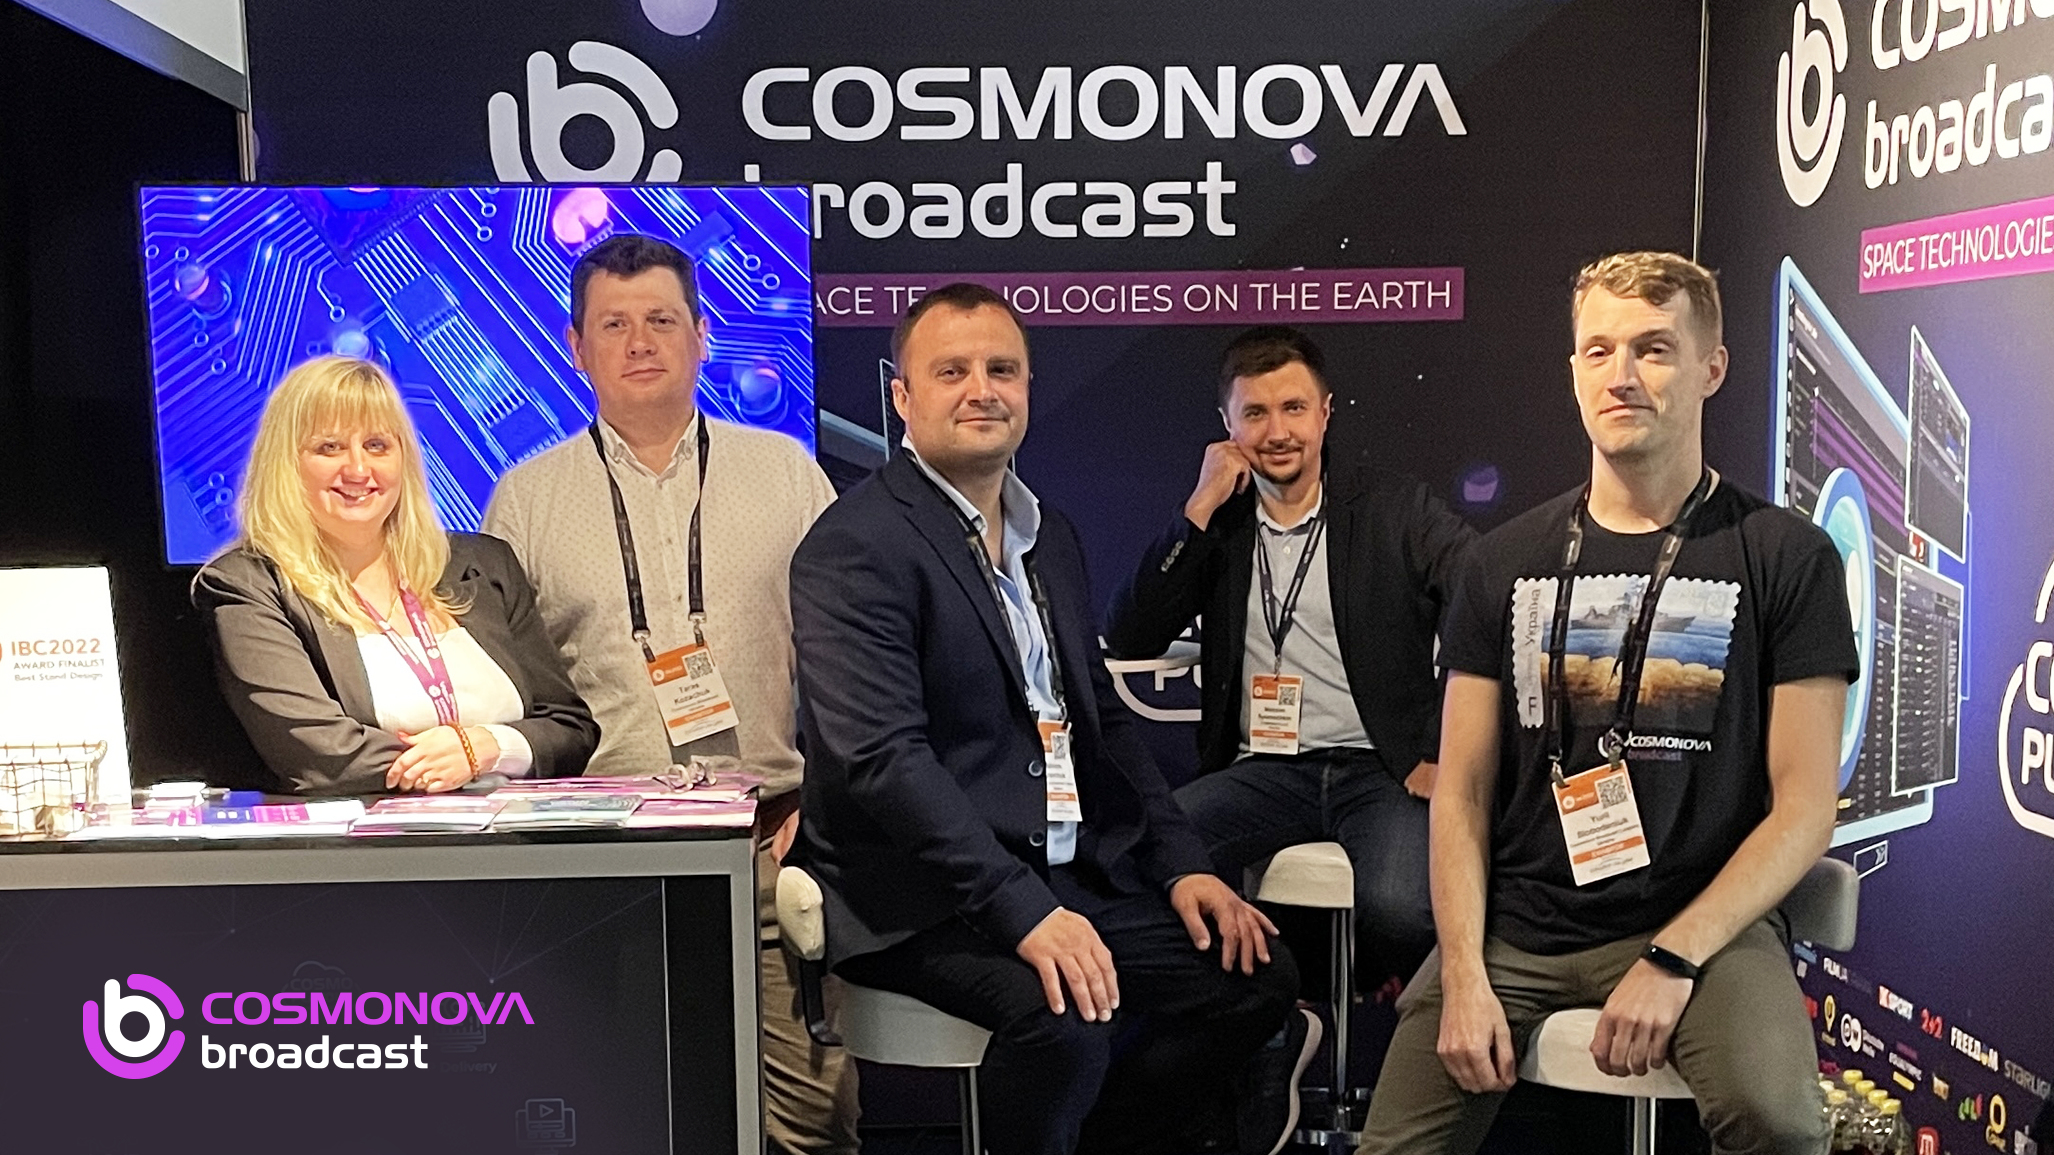 Photo: The Cosmonova Broadcast team at IBC 2022